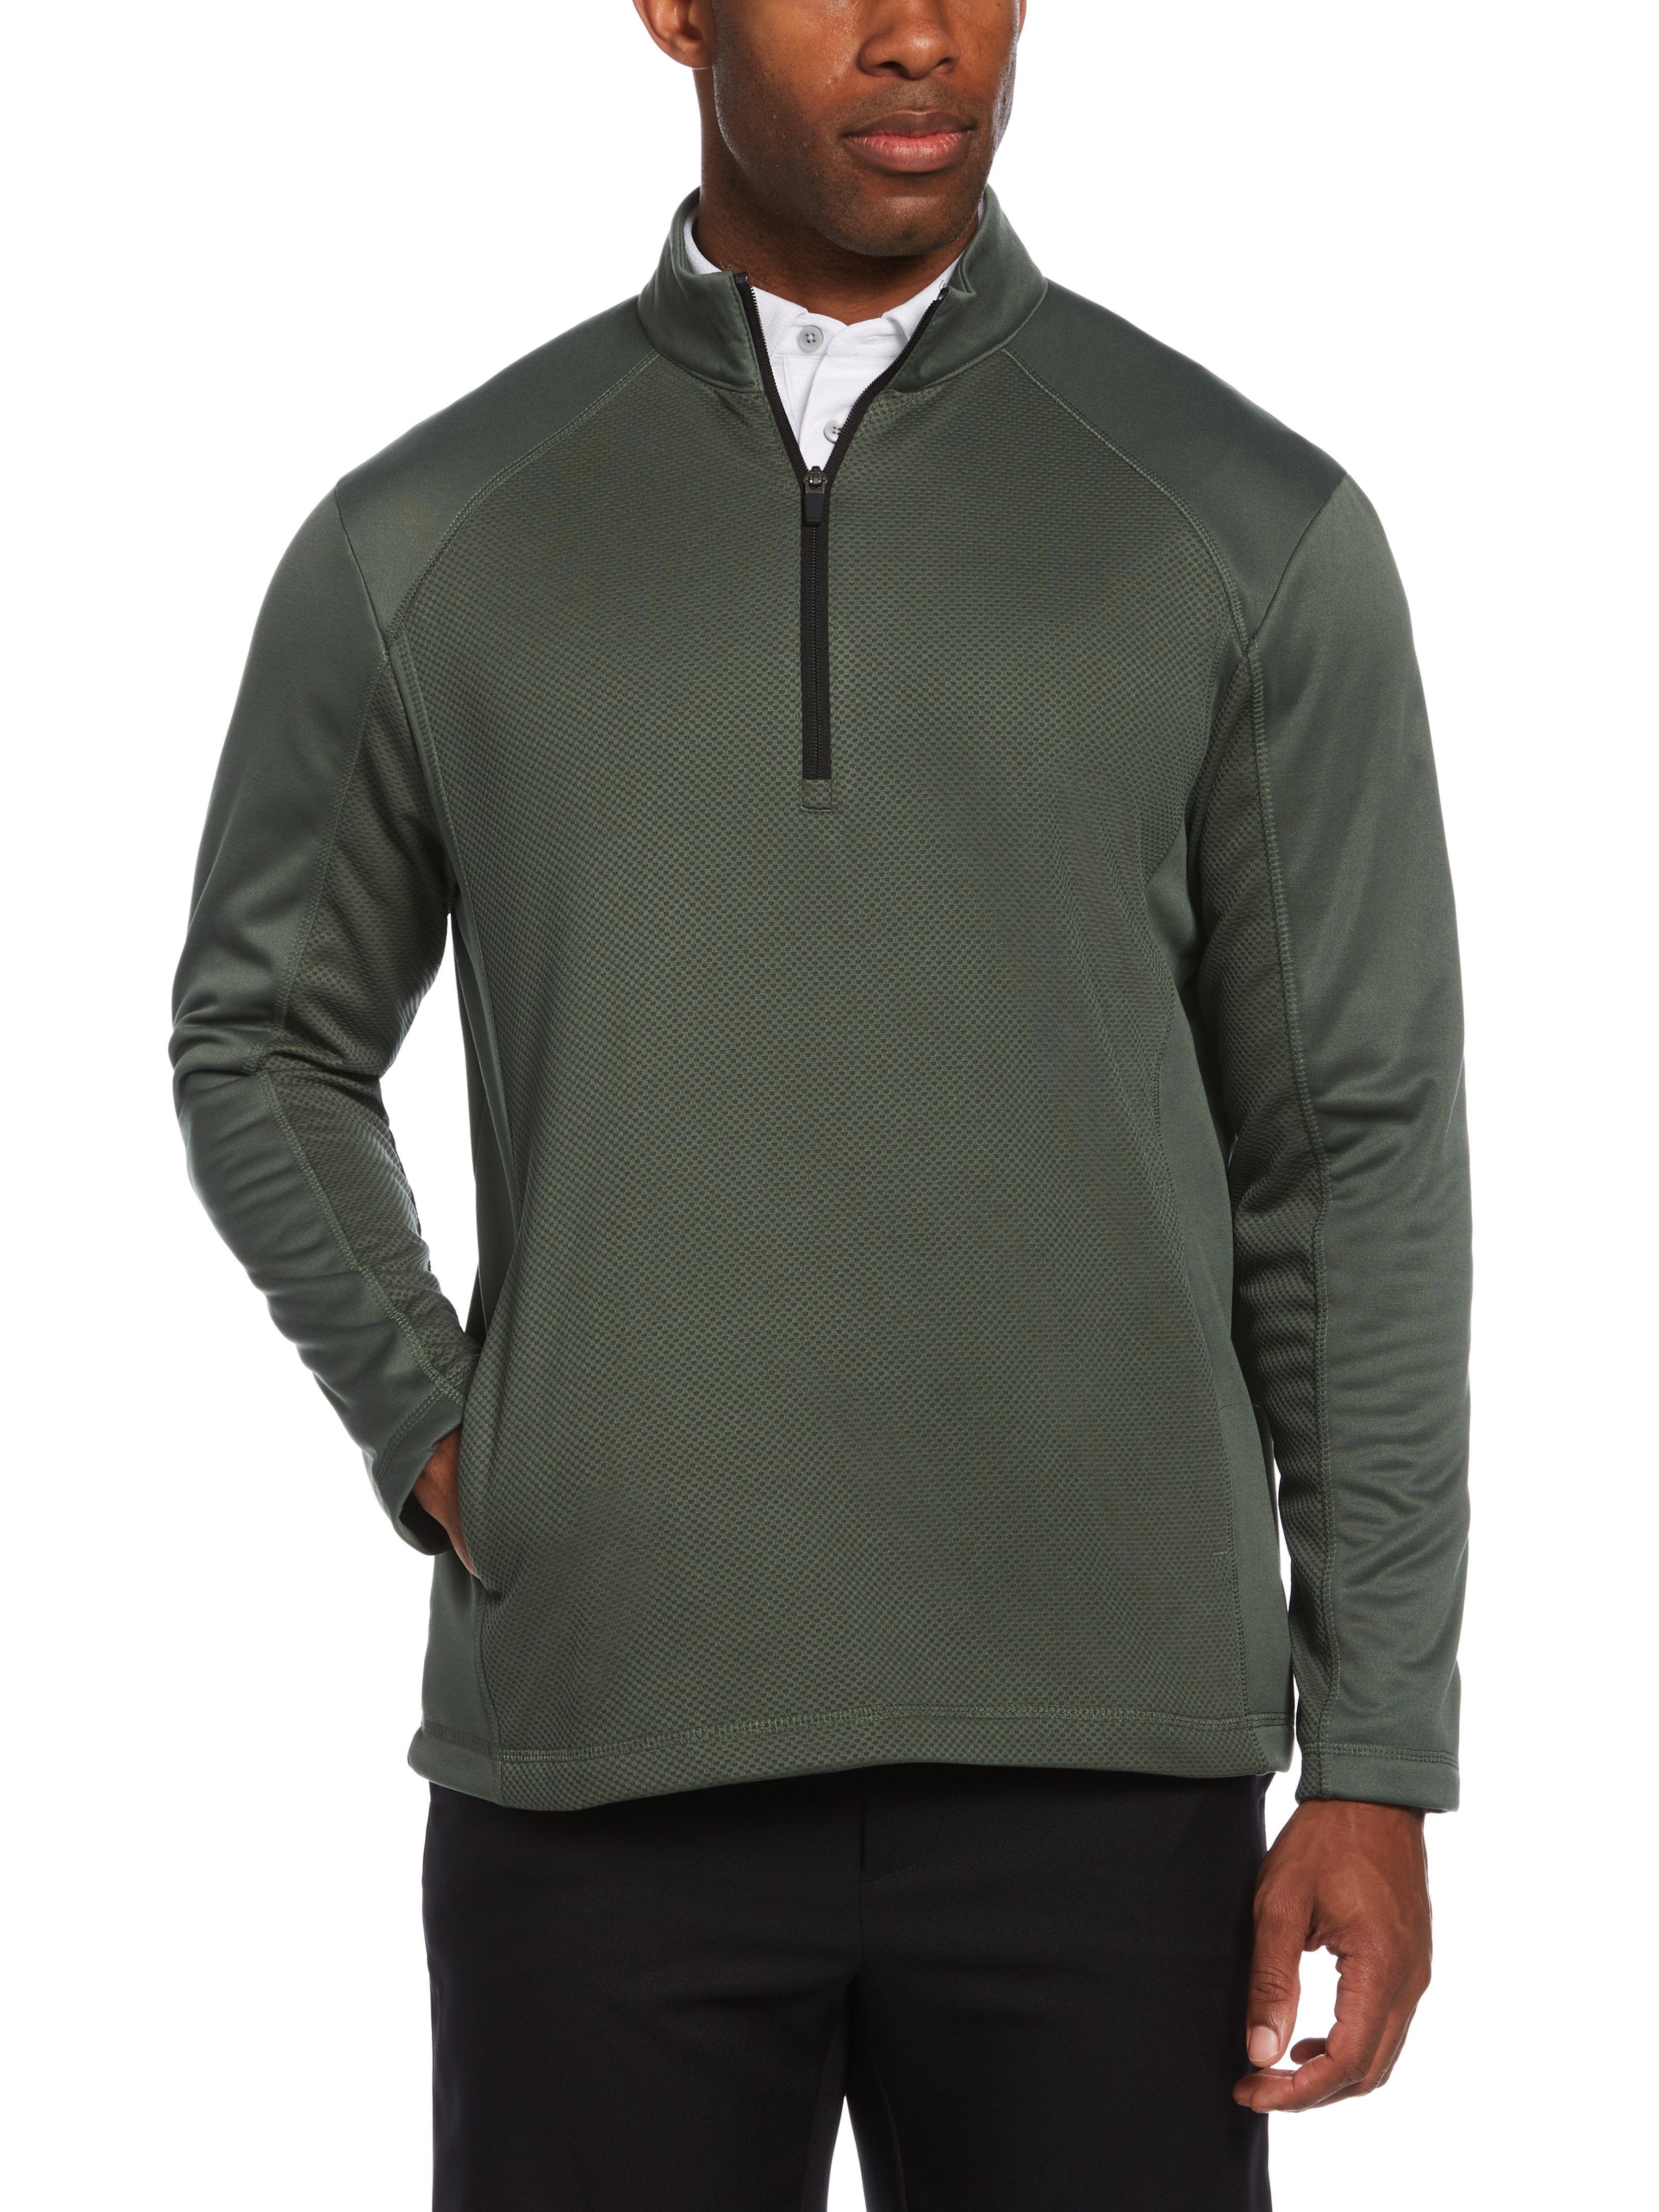 PGA TOUR Apparel Mens Mixed Texture Fleece 1/4 Zip Golf Jacket Top, Size Small, Duck Green, 100% Polyester | Golf Apparel Shop